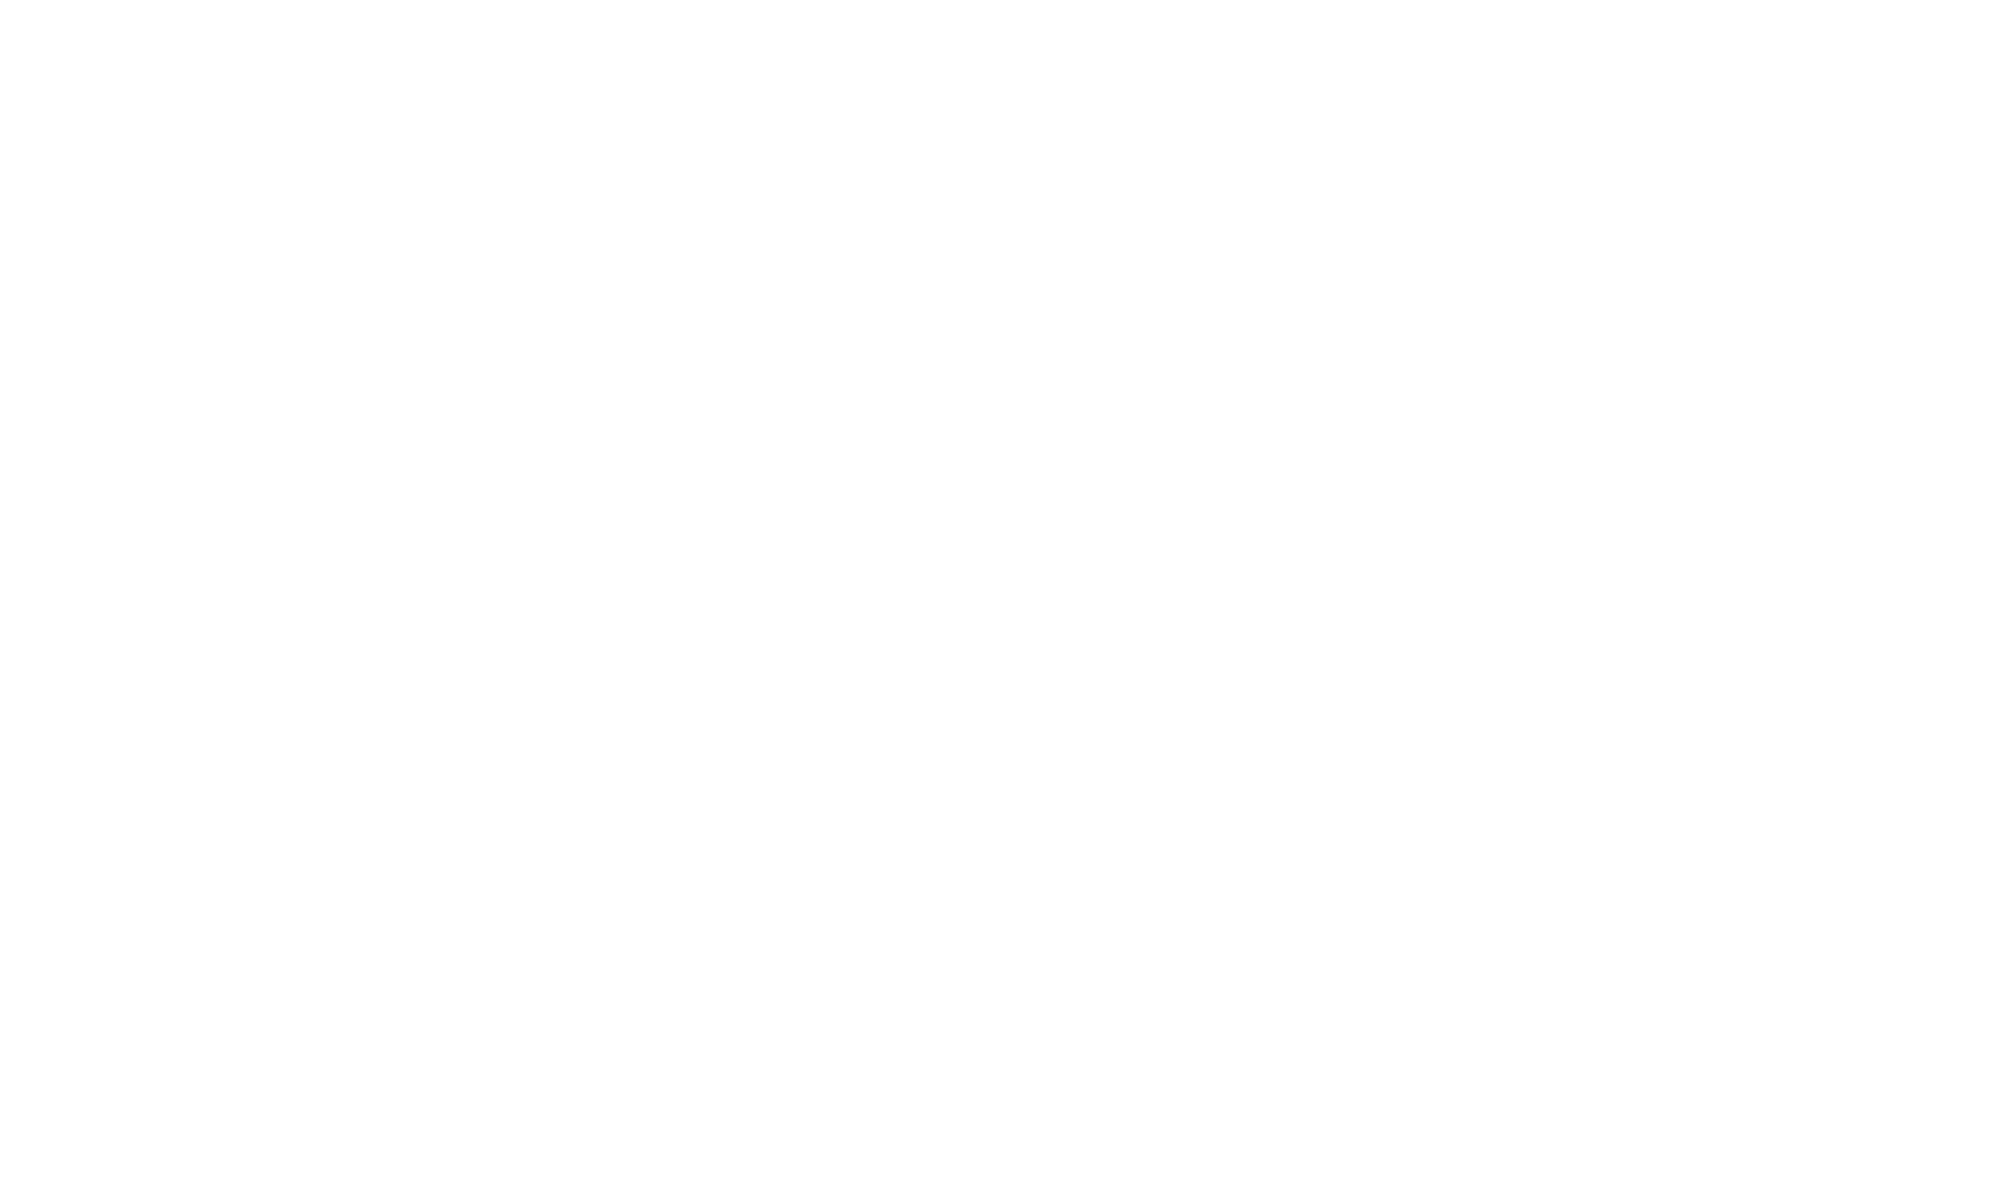 Milestone Construction LTD logo